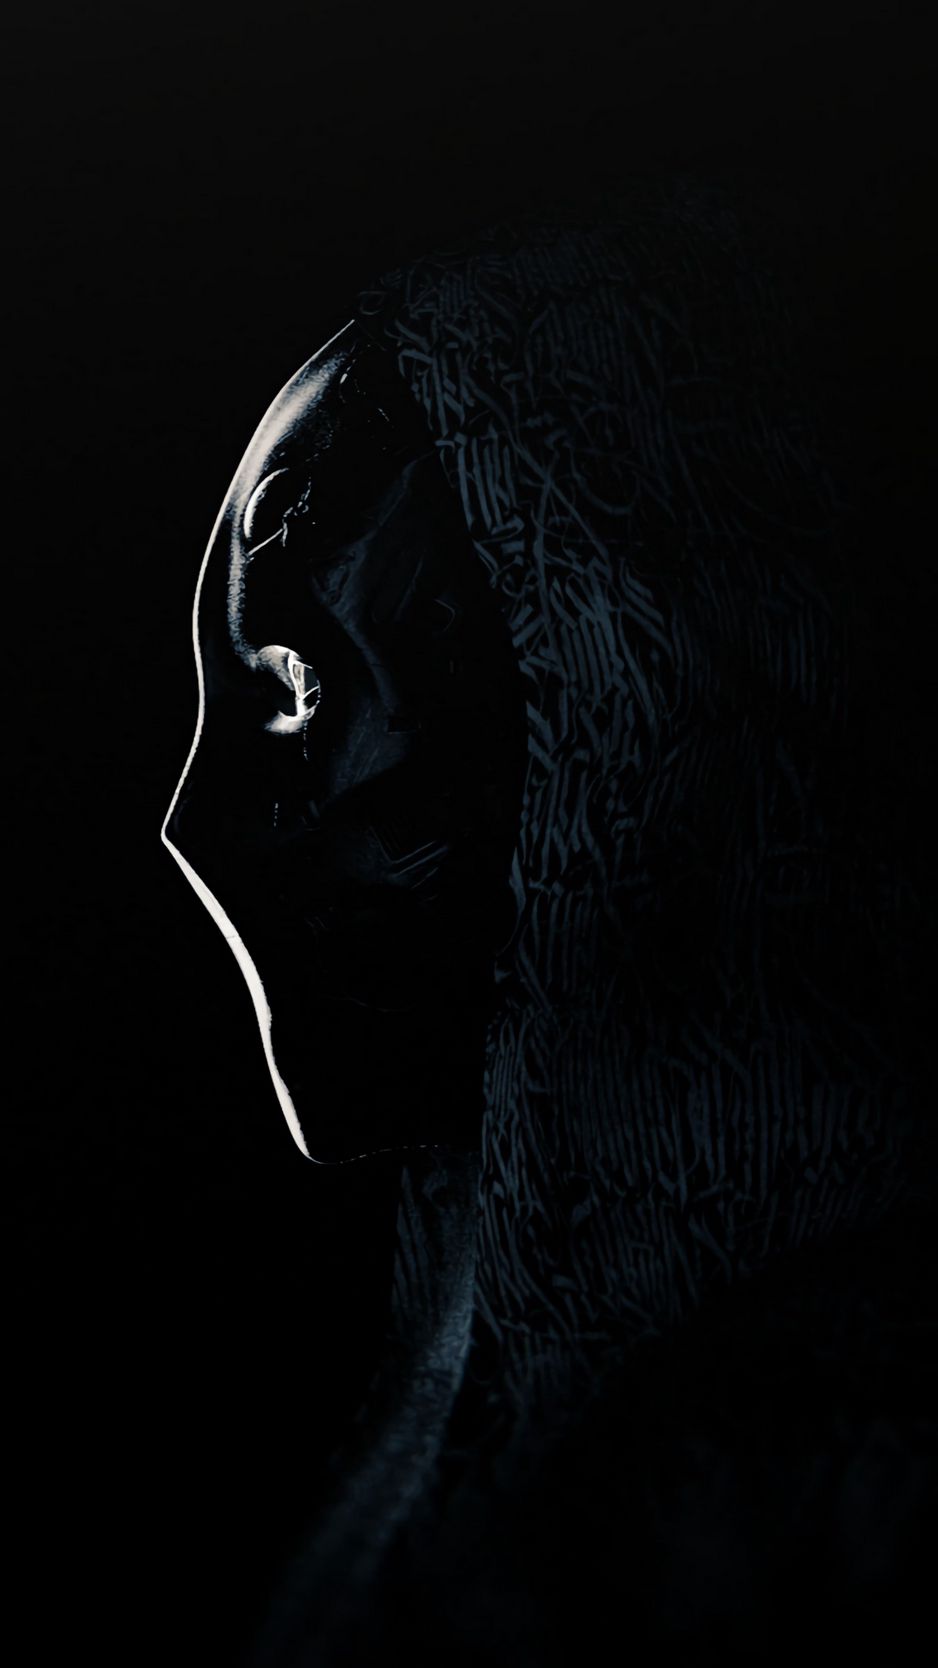 Best Black Mask Pictures [HD] | Download Free Images on Unsplash